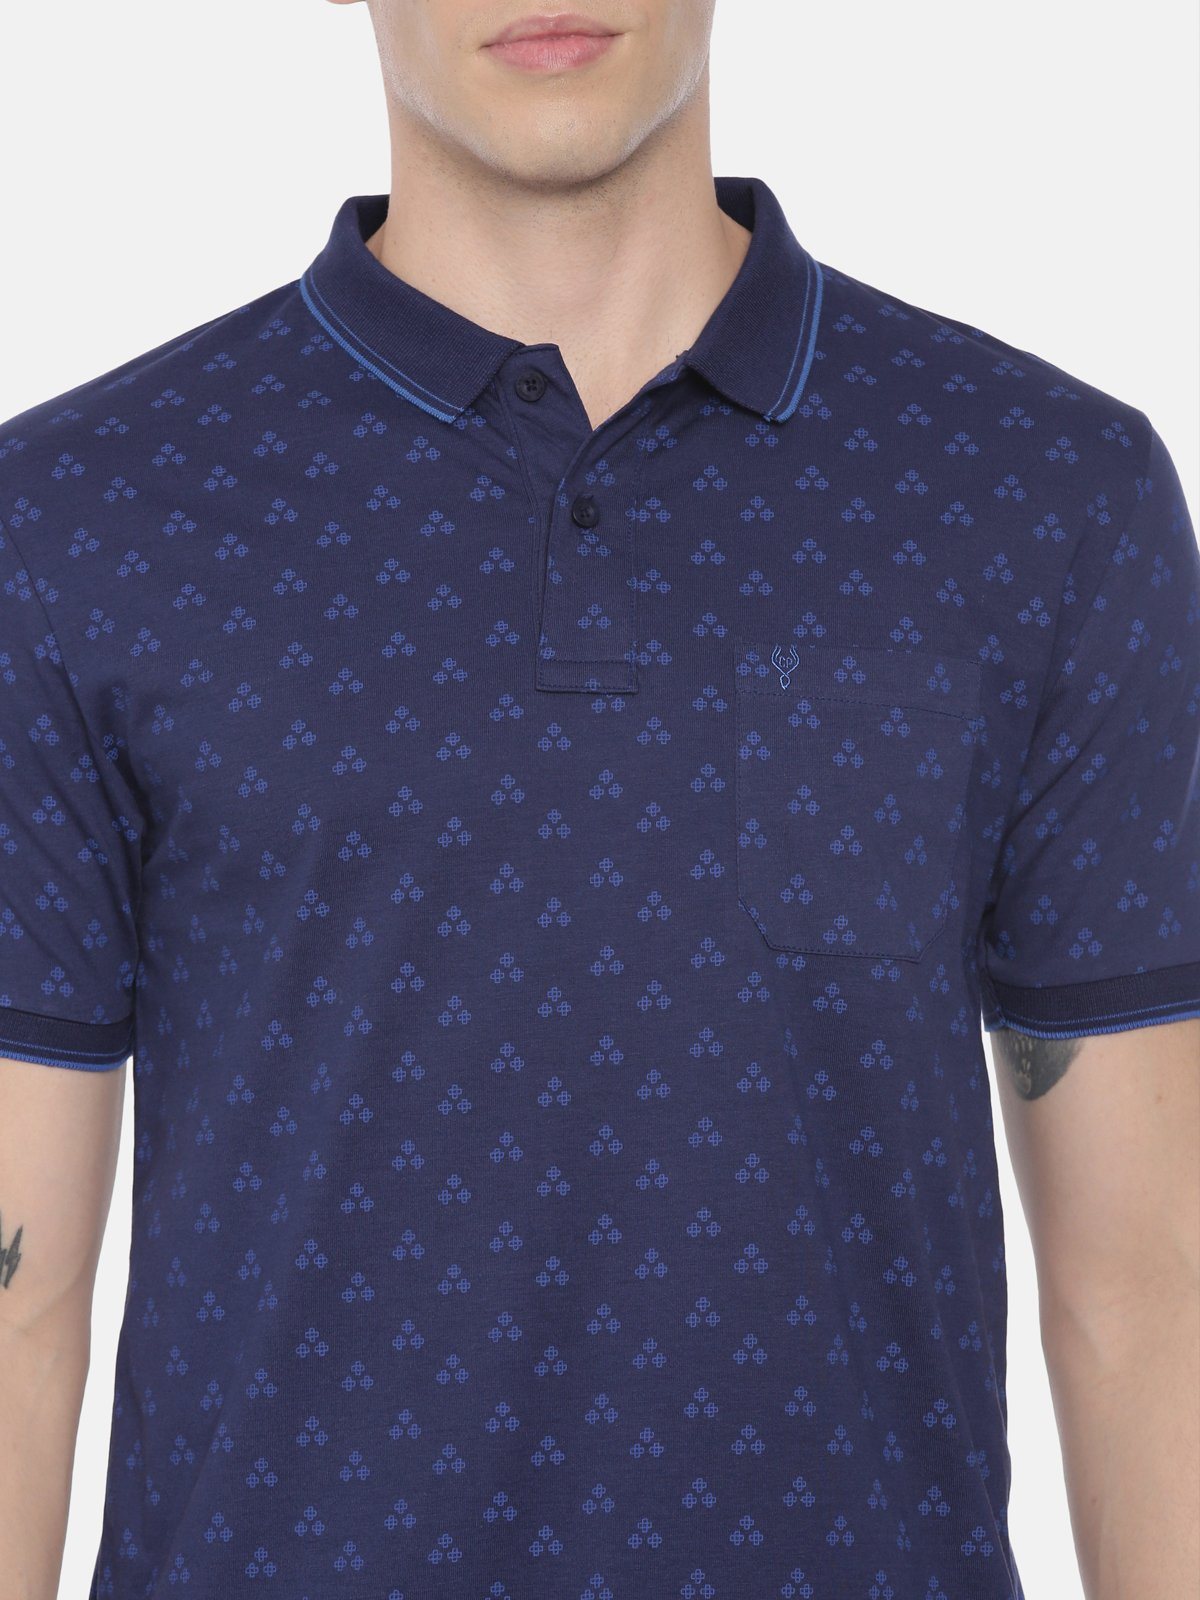 Classic polo Men's Polo Neck Half Sleeve Navy Blue 100% Cotton Slim Fit T-Shirt BELLO - 121 A SF P T-shirt Classic Polo 